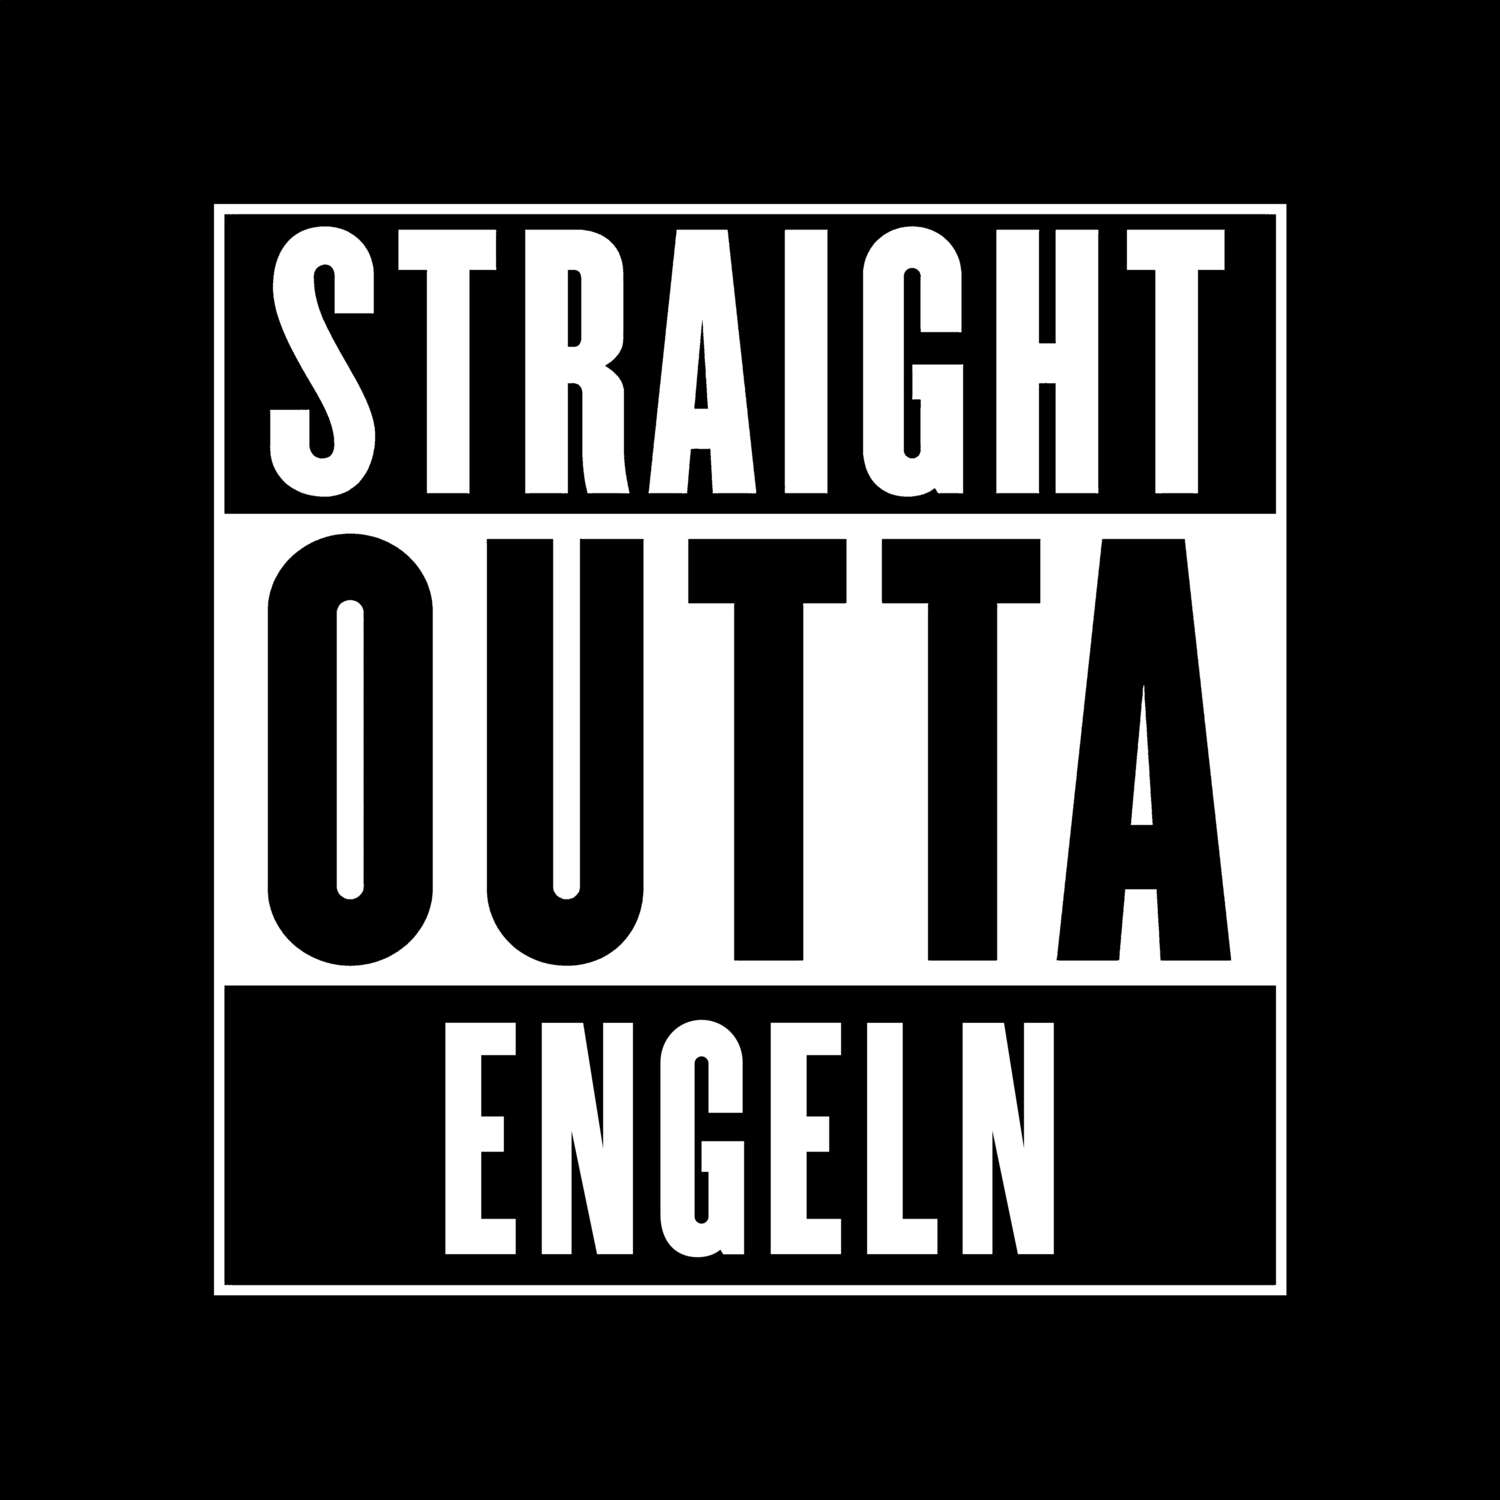 Engeln T-Shirt »Straight Outta«